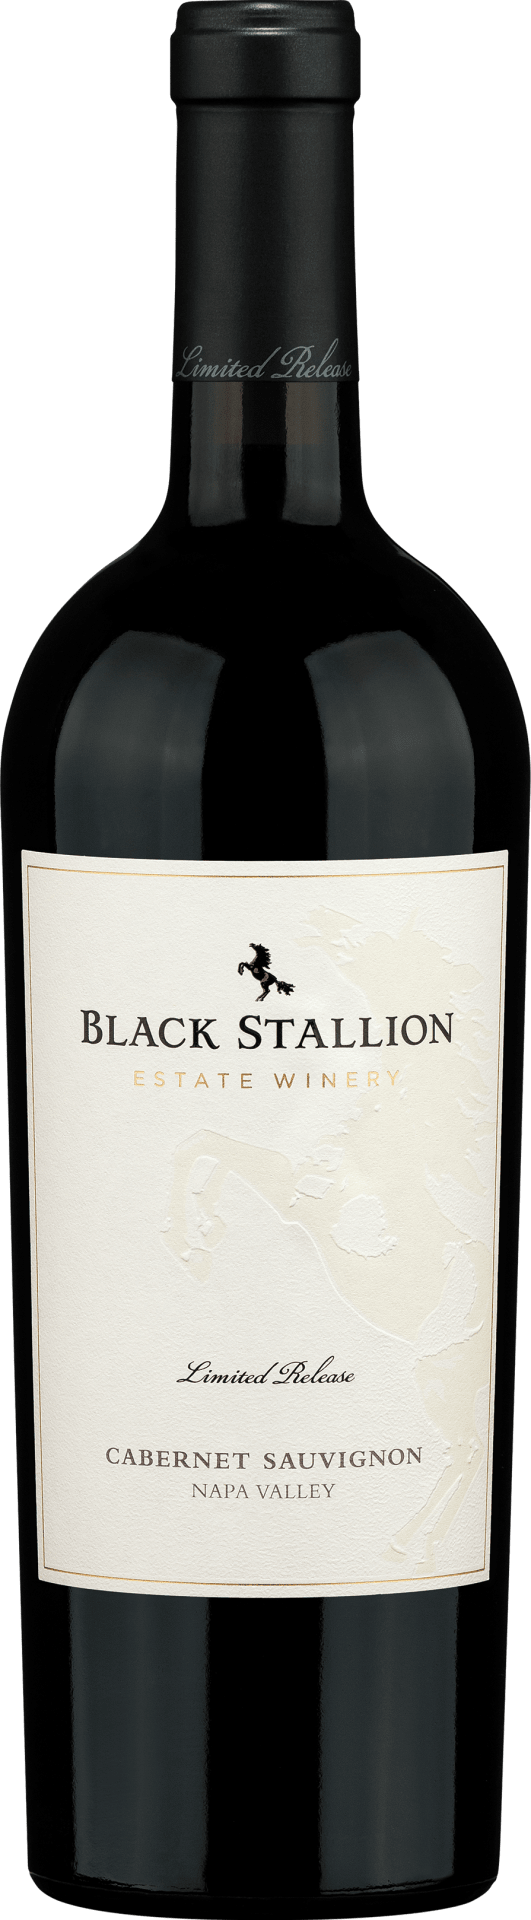 Black Stallion Cabernet Sauvignon  Limited Release